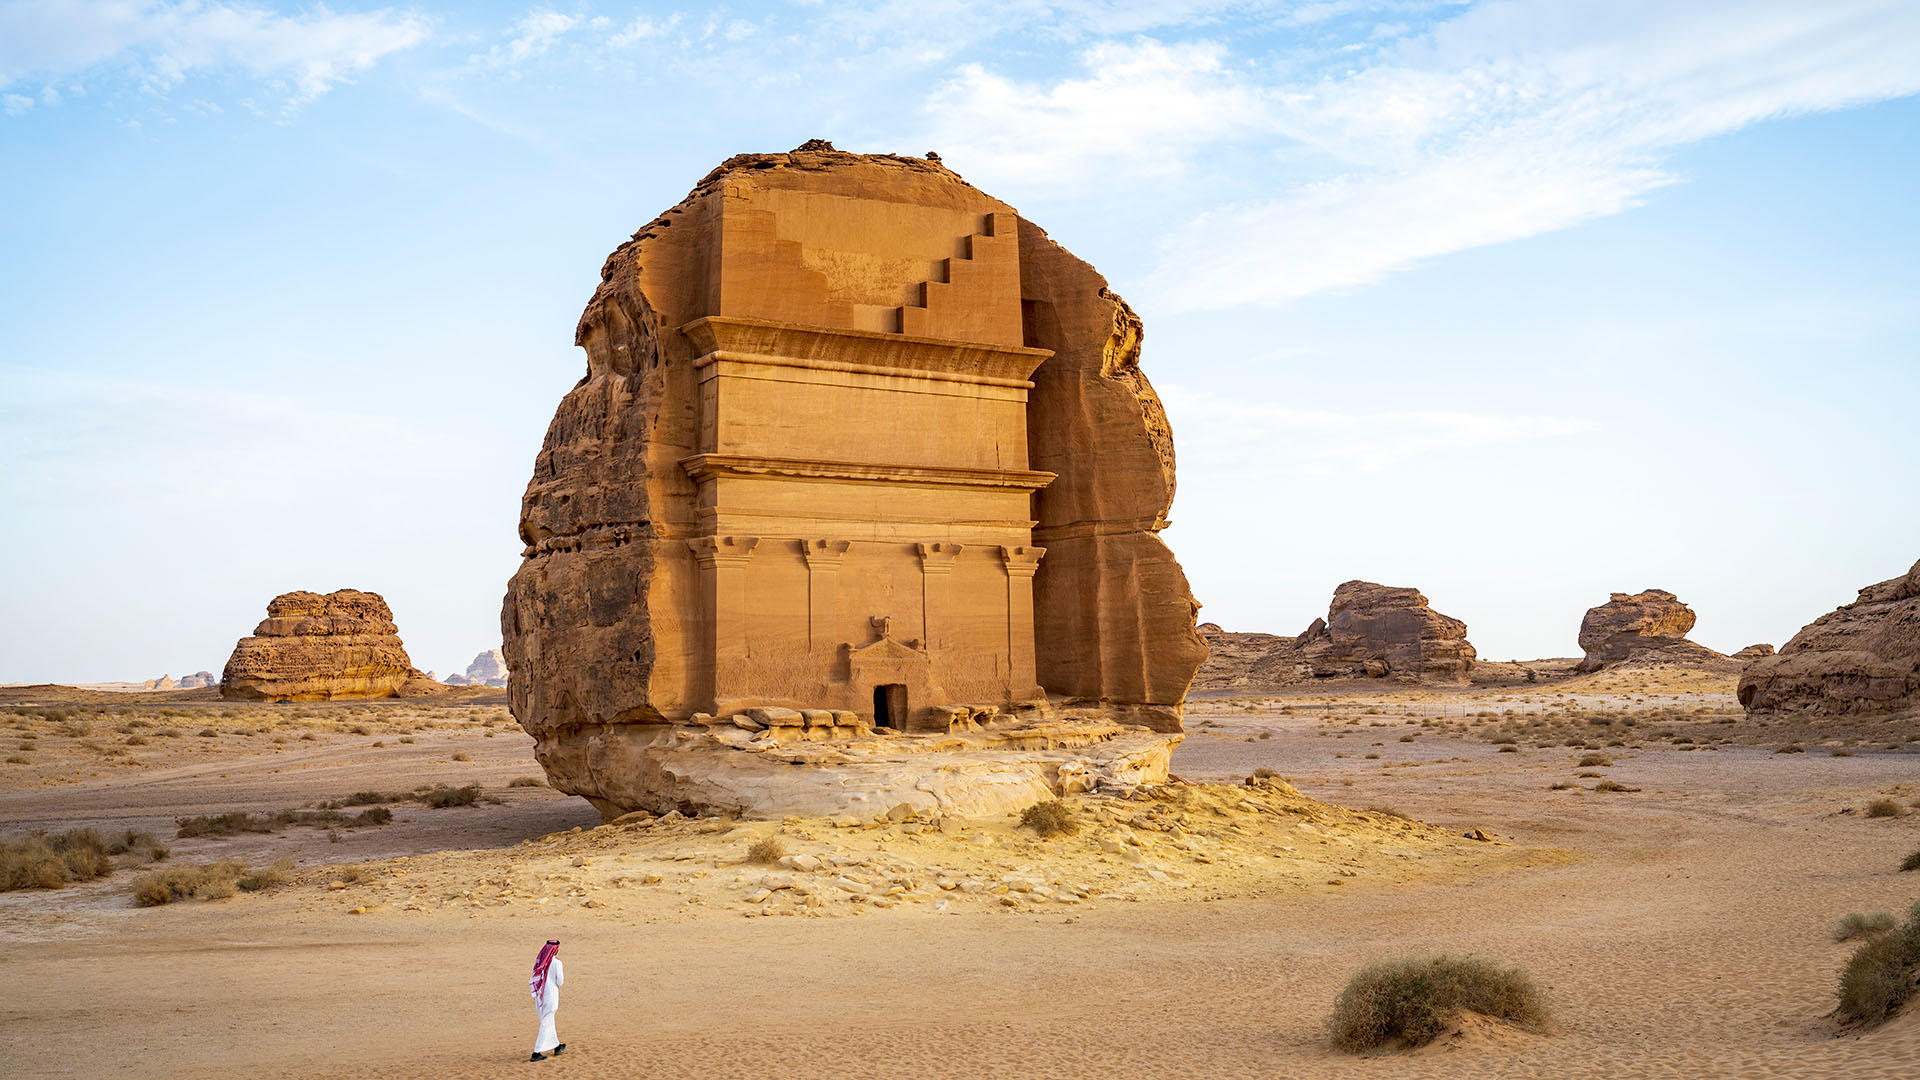 Man standing near Nihyan Tomb surrounded by desert and rocks in Hegra, Saudi Arabia